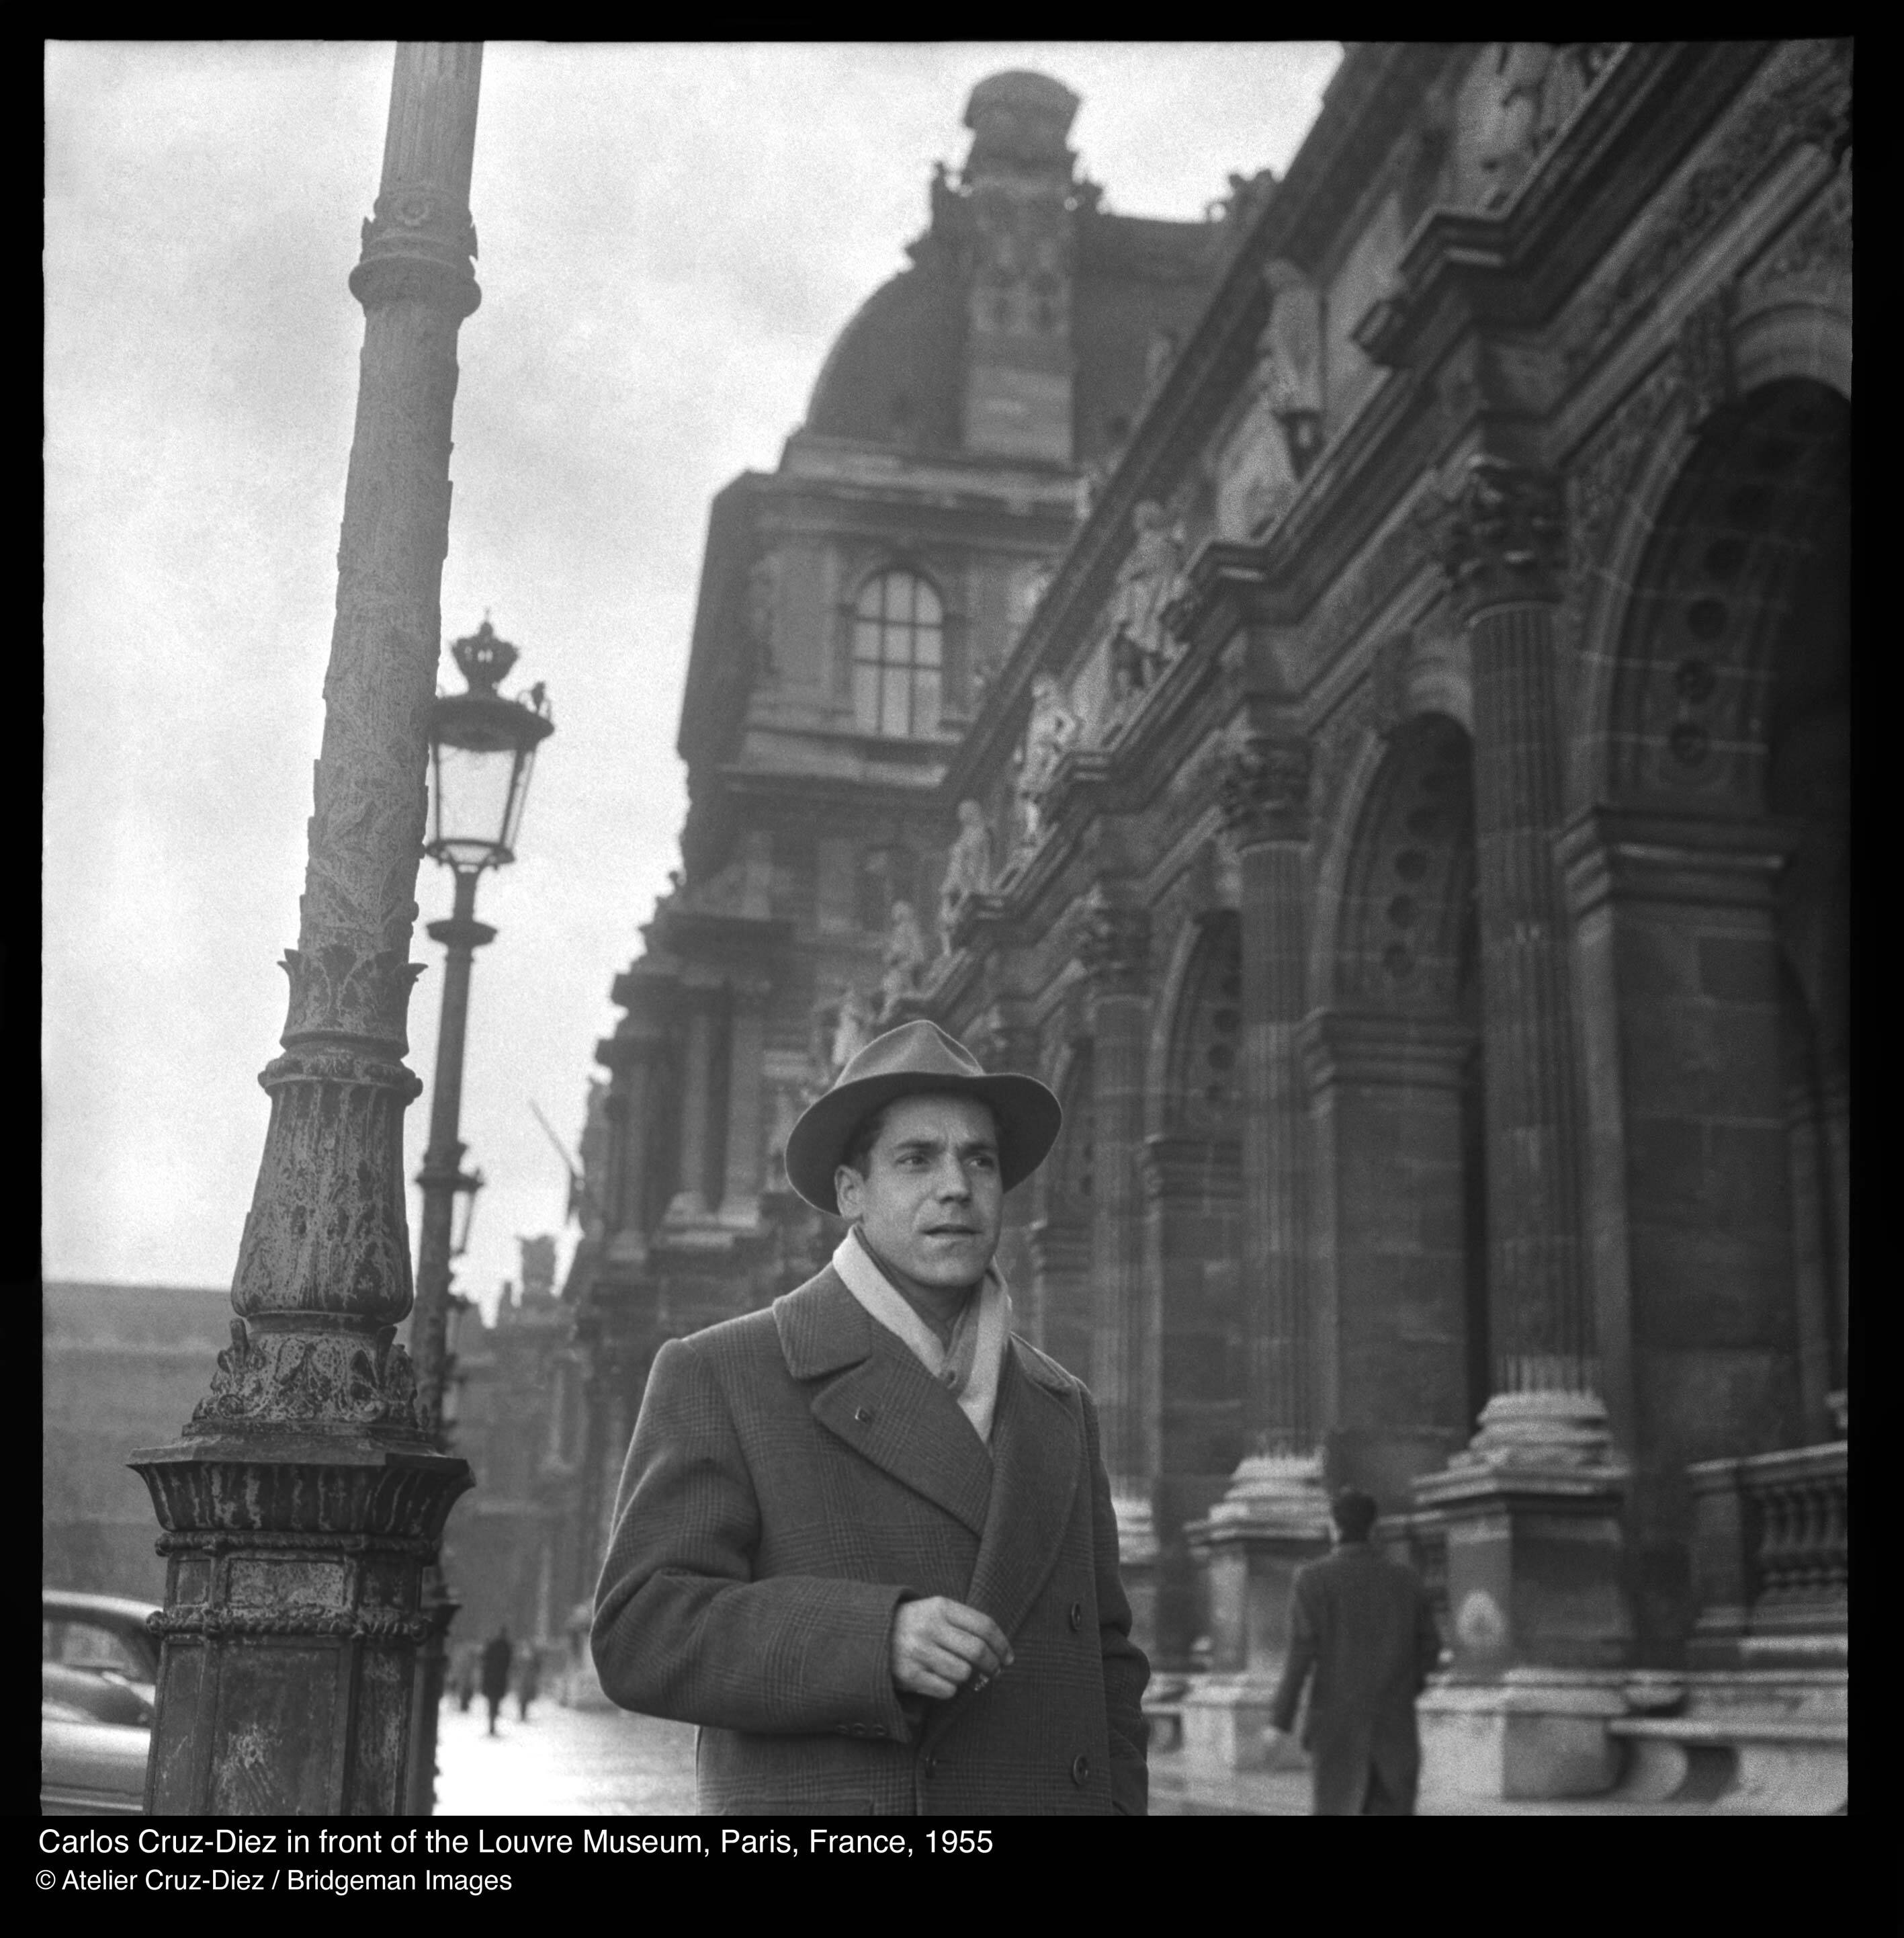 Carlos Cruz-Diez in front of the Louvre Museum, Paris, France, 1955